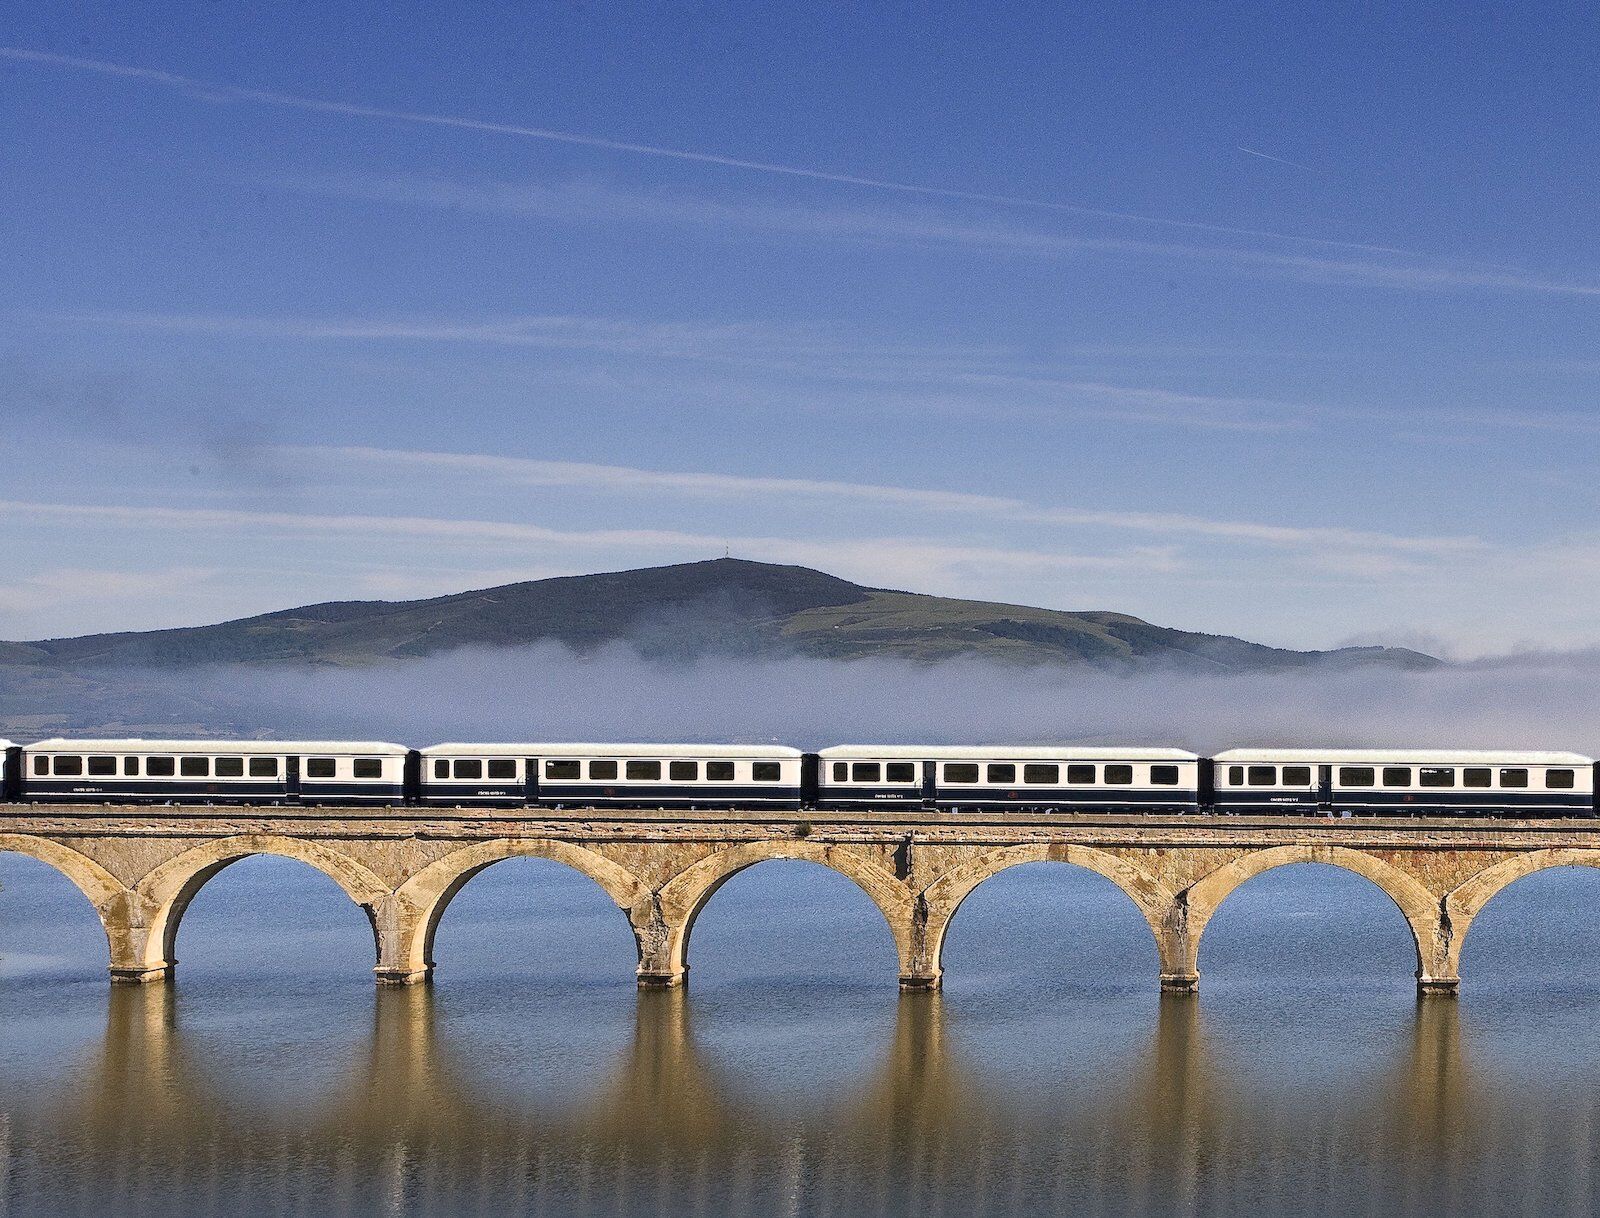 Costa Verde Express luxury train traveling in Northern Spain